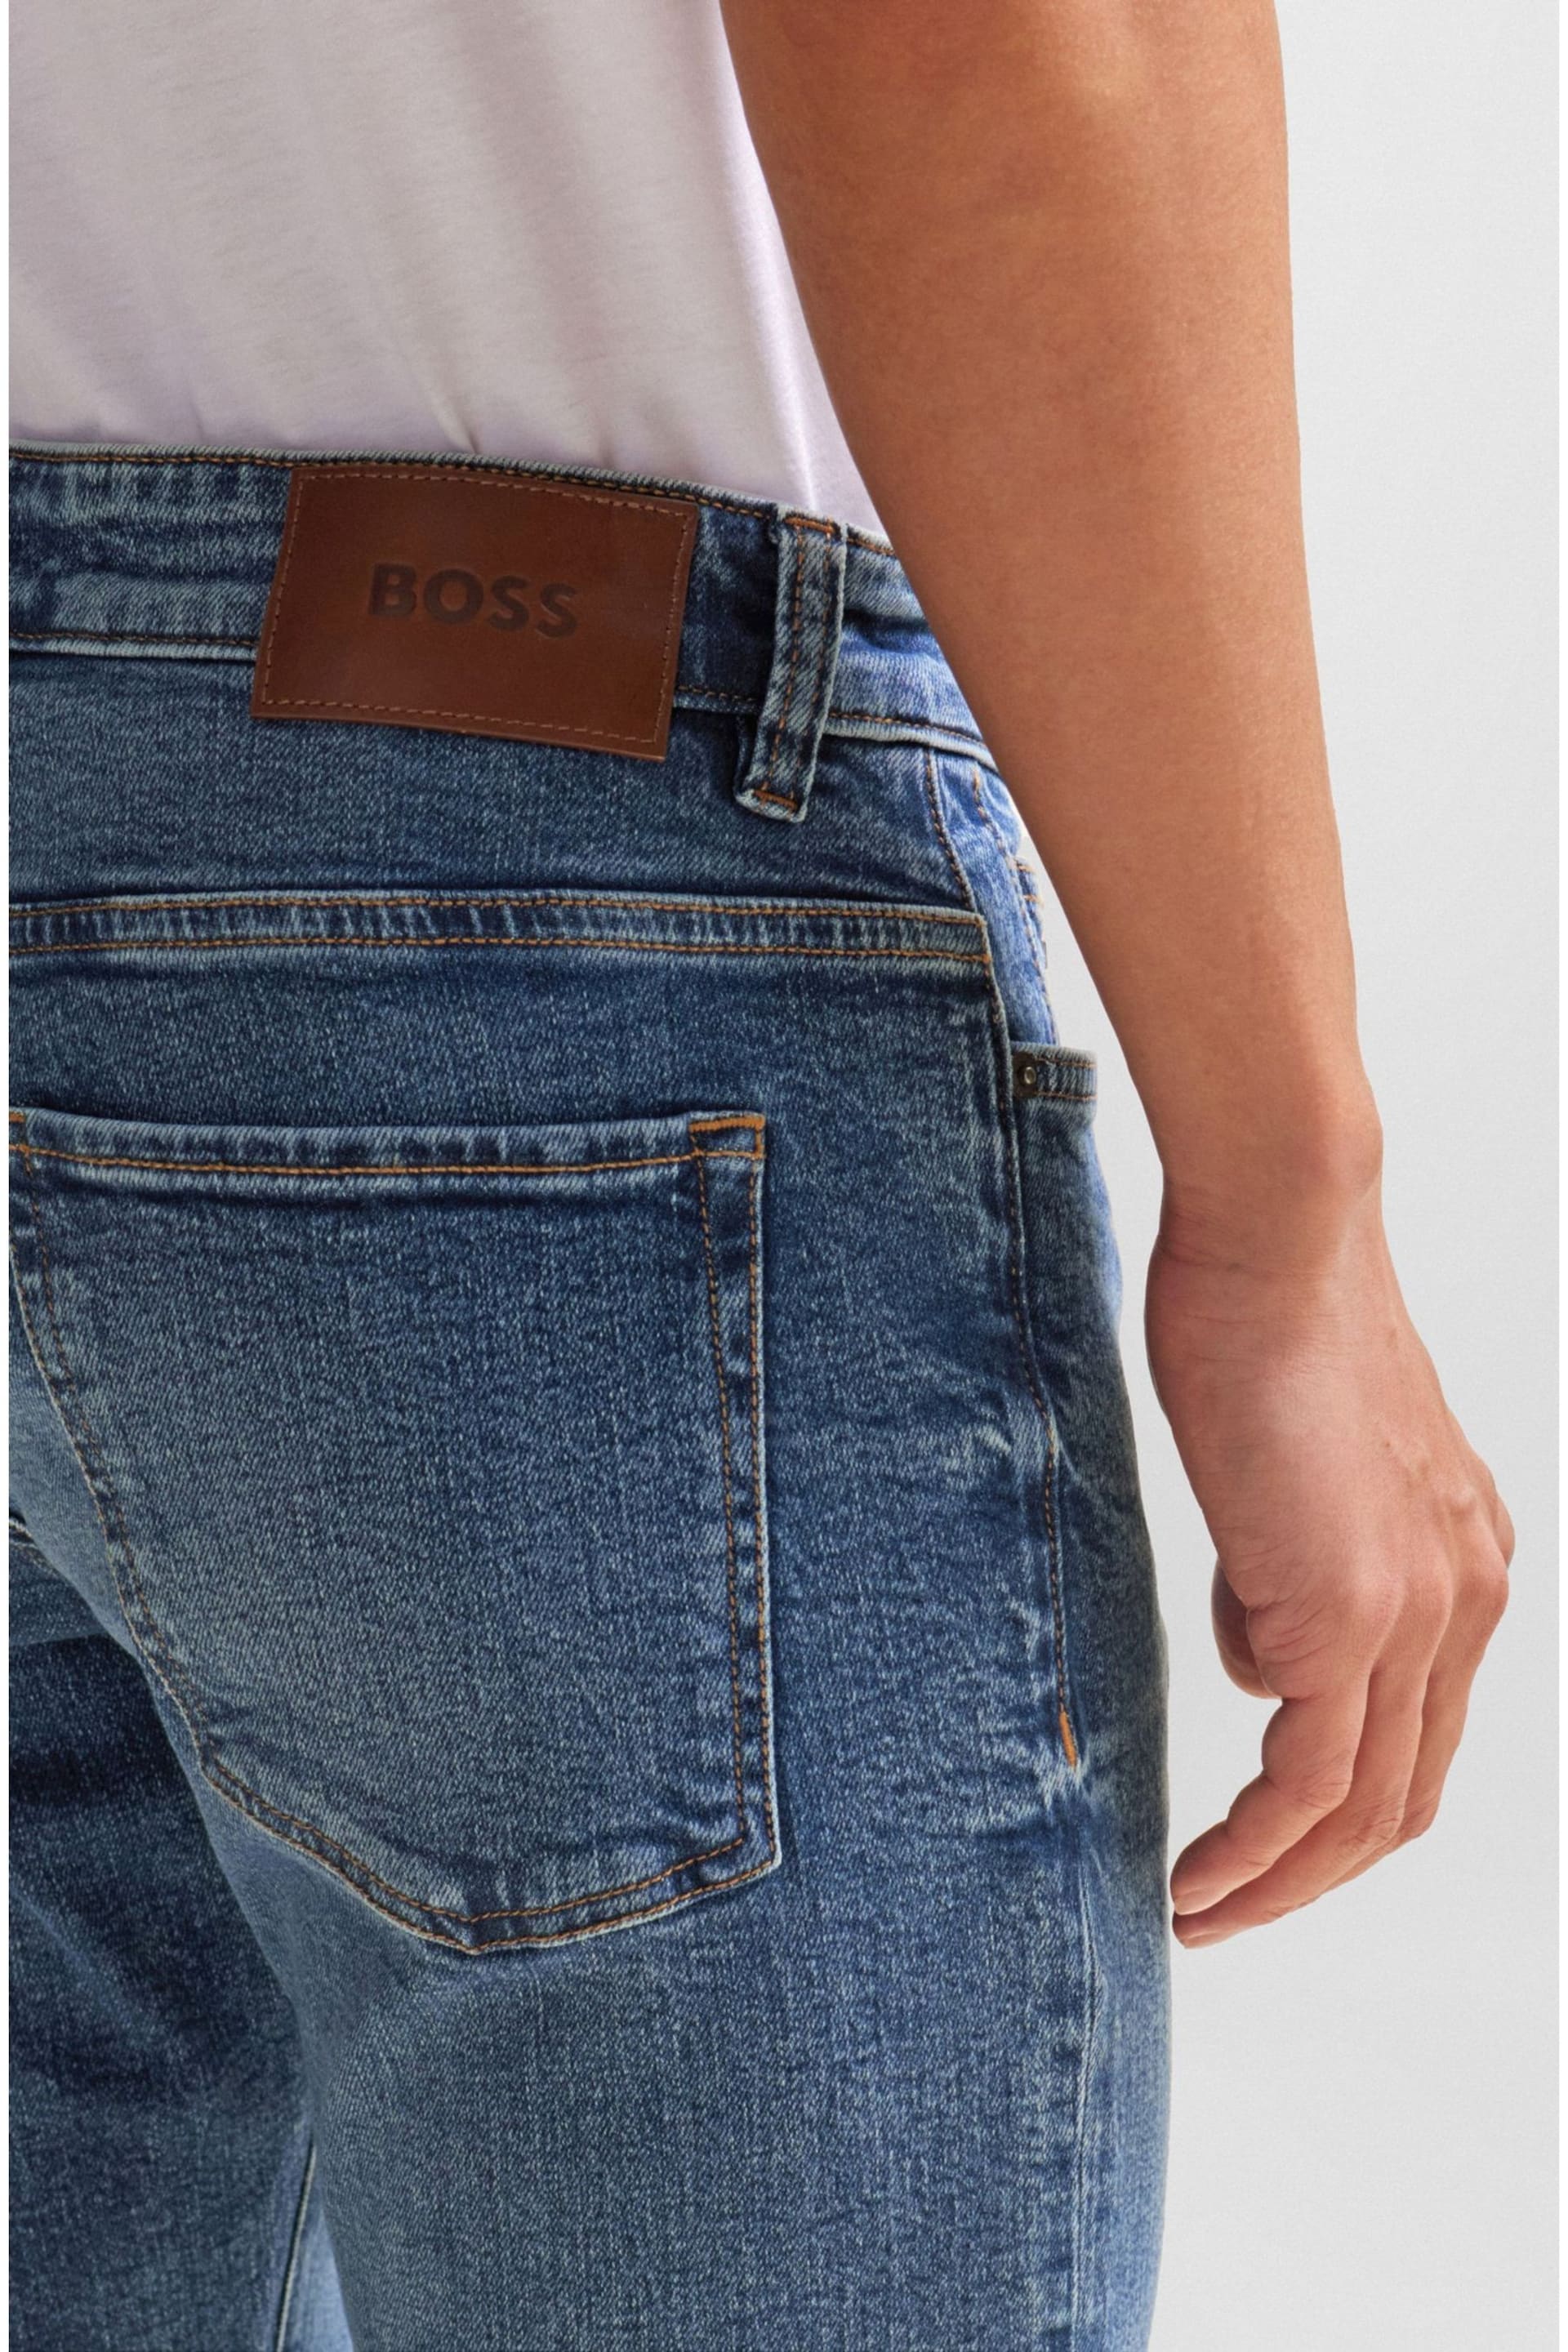 BOSS Blue Denim Delaware Slim Fit Stretch Jeans - Image 4 of 5